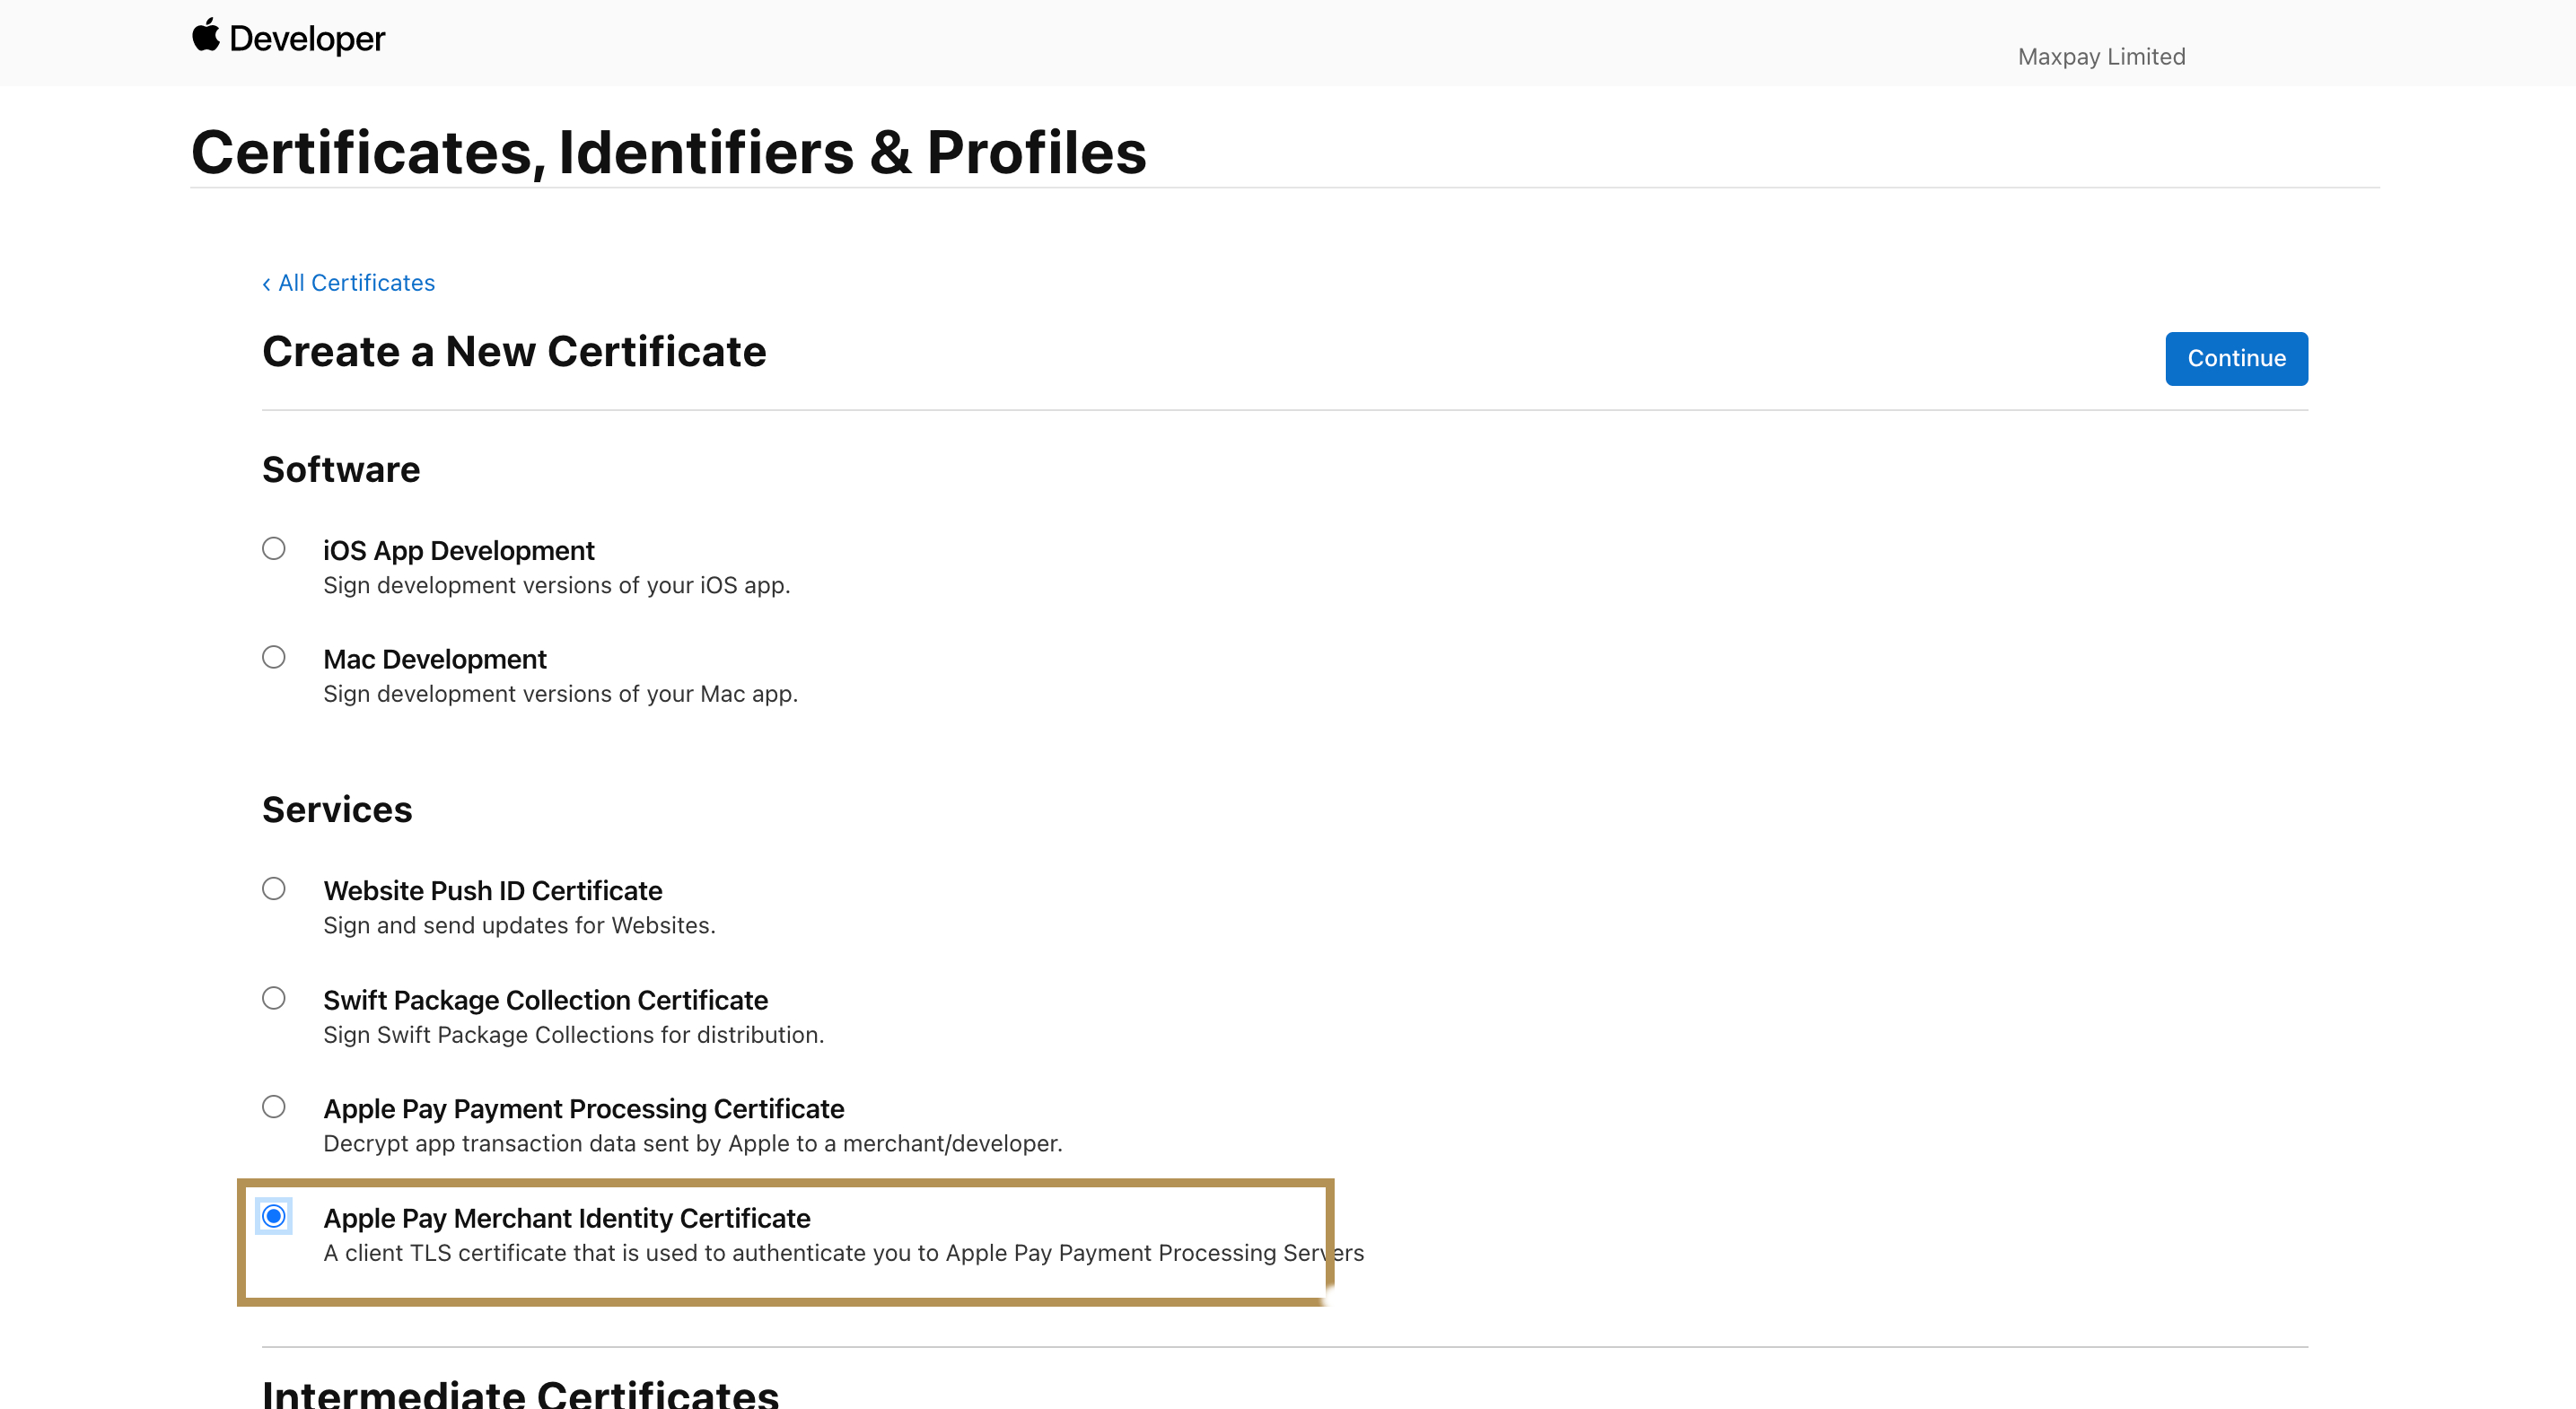 Generating a Merchant Identity Certificate